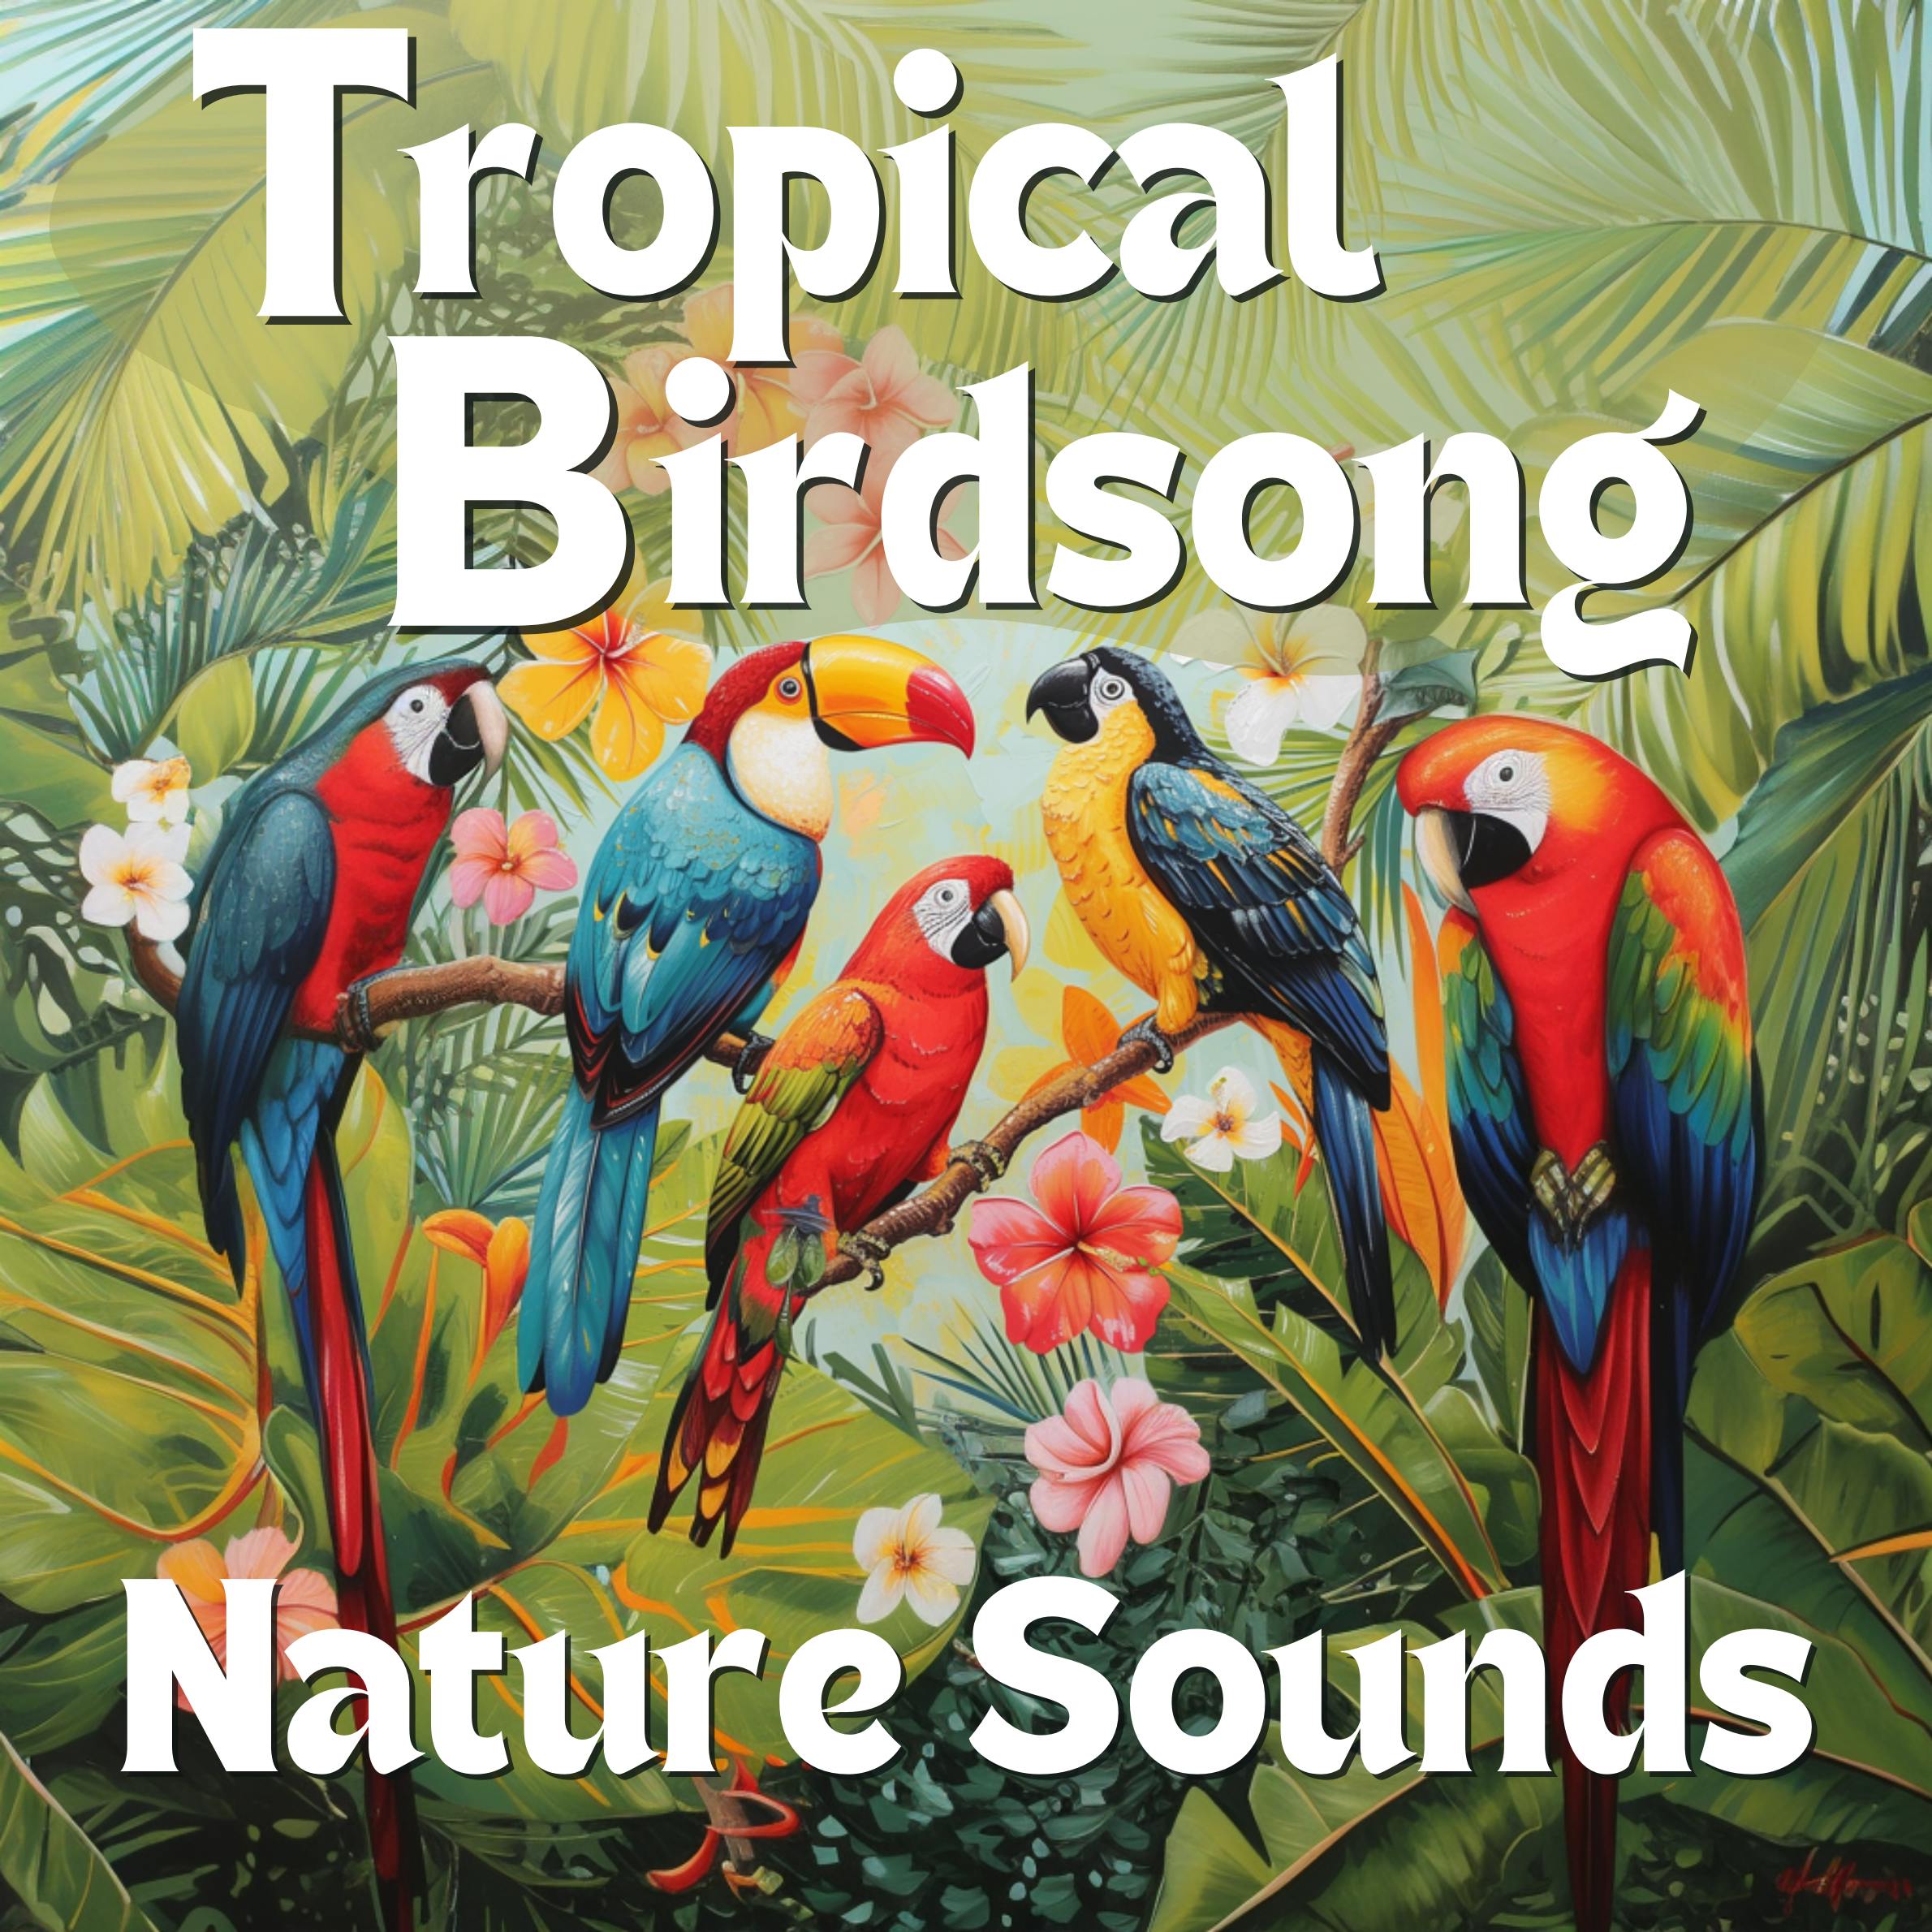 Tropical Birdsong - Sounds of nature